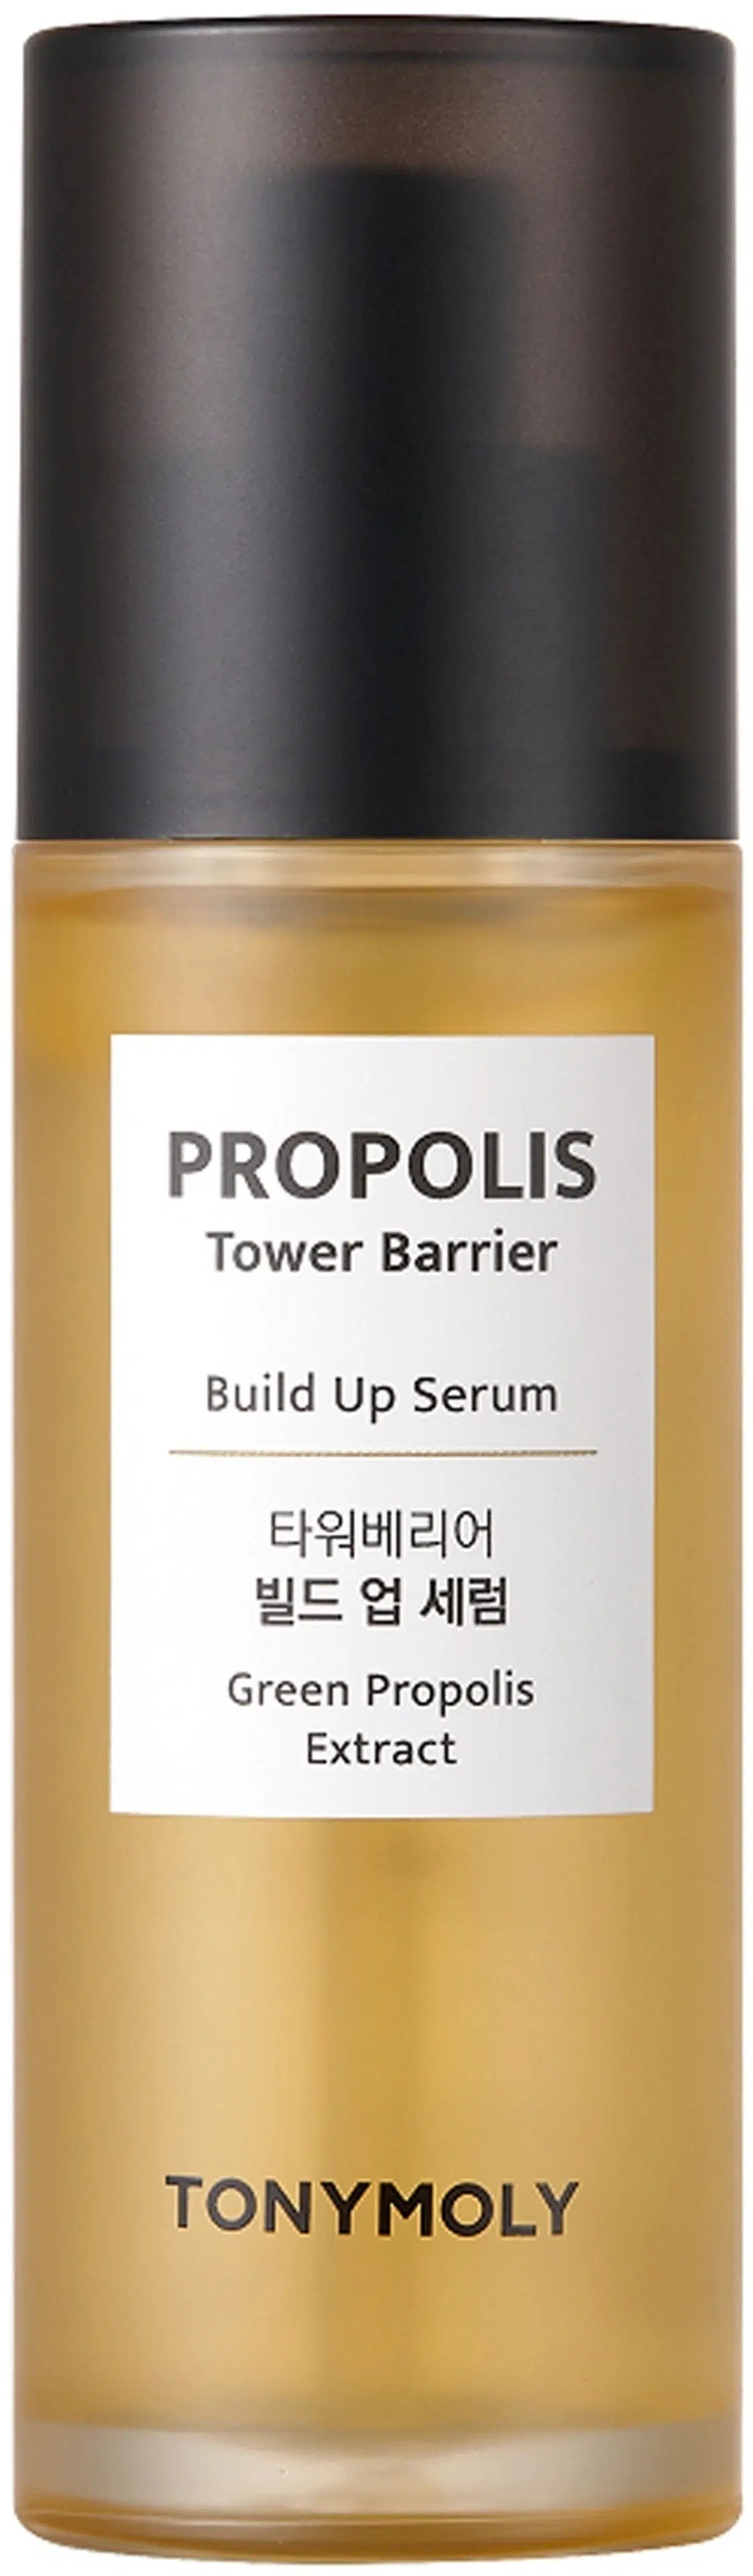 TONYMOLY Propolis Tower Barrier Build up serum korjaava ja heleyttävä seerumi 60ml